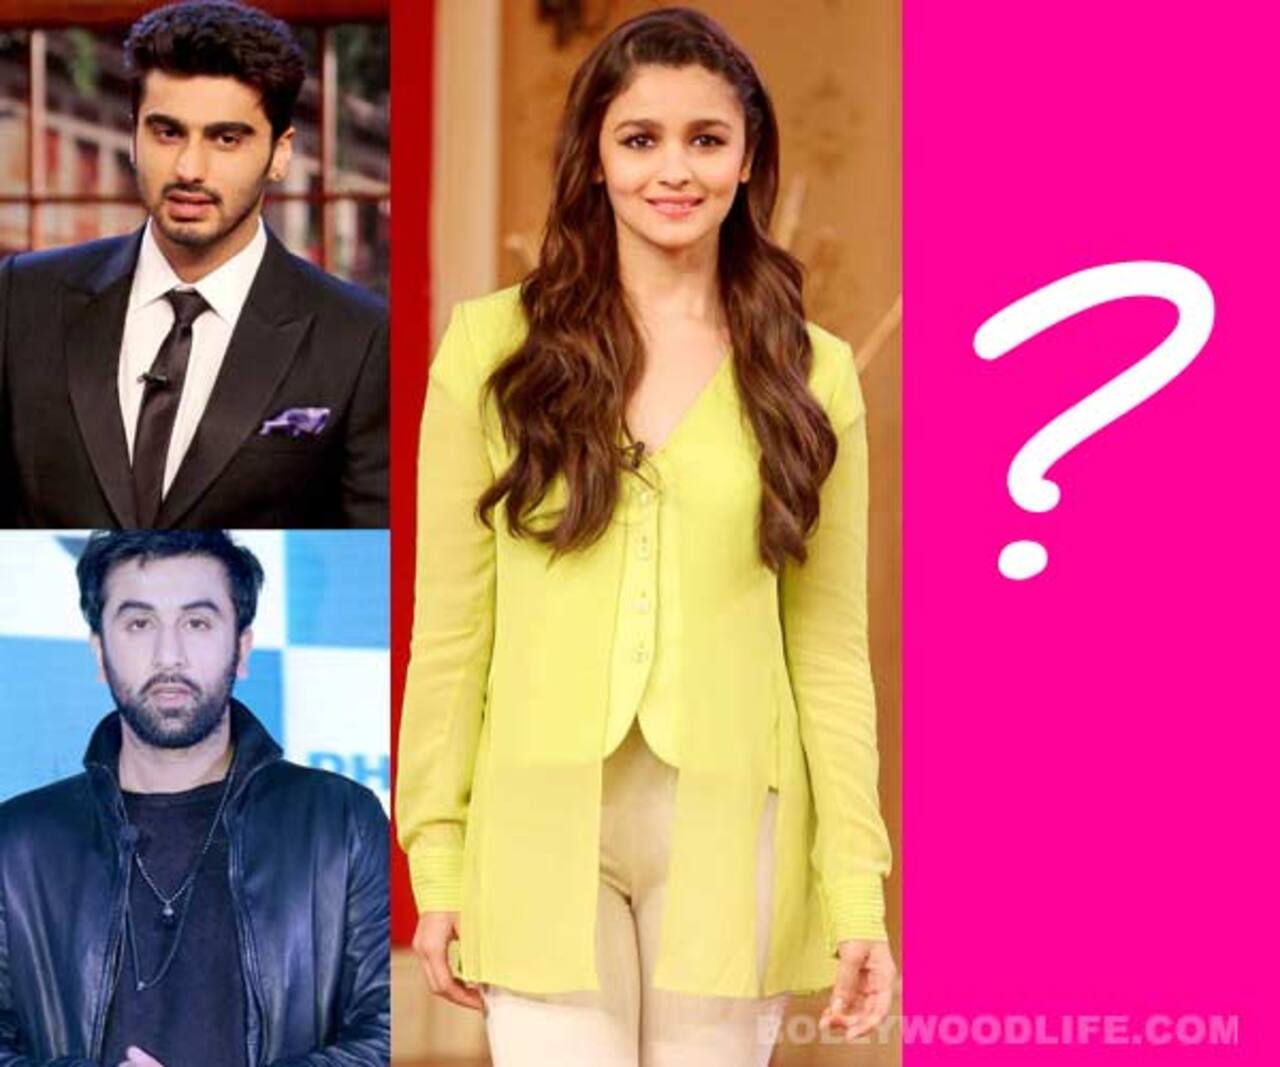 Who is Alia Bhatt dating - Ranbir Kapoor, Arjun Kapoor or a mystery man?